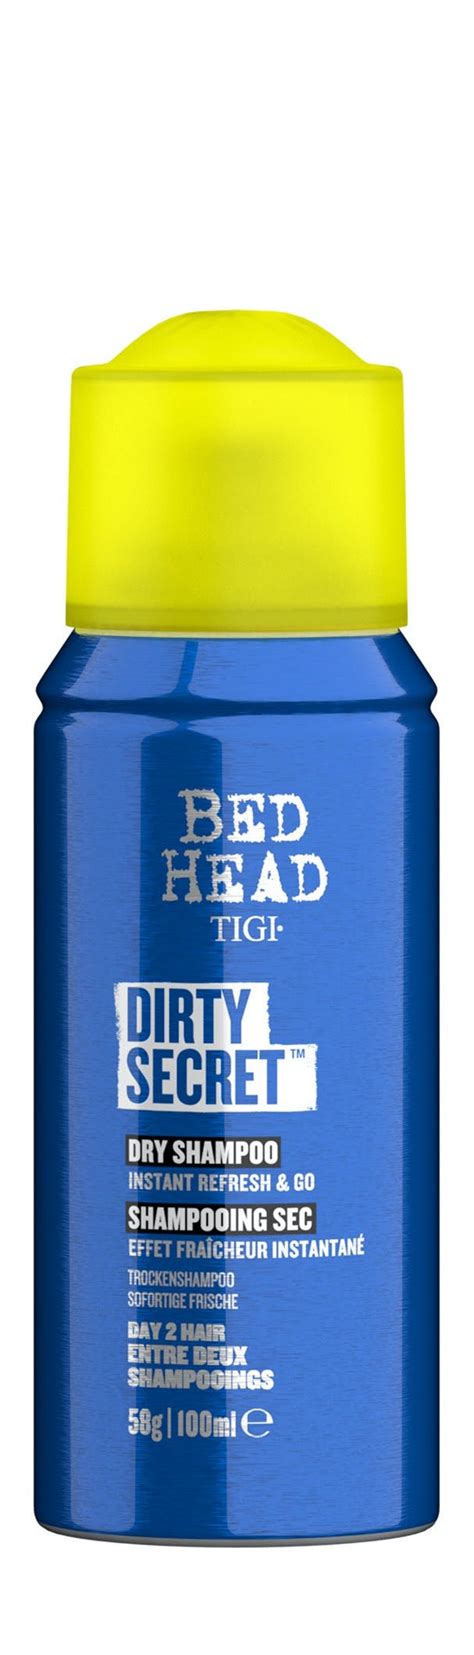 Tigi Bed Head Mini Dirty Secret Dry Shampoo 100 Ml 74 95 Kr Fri